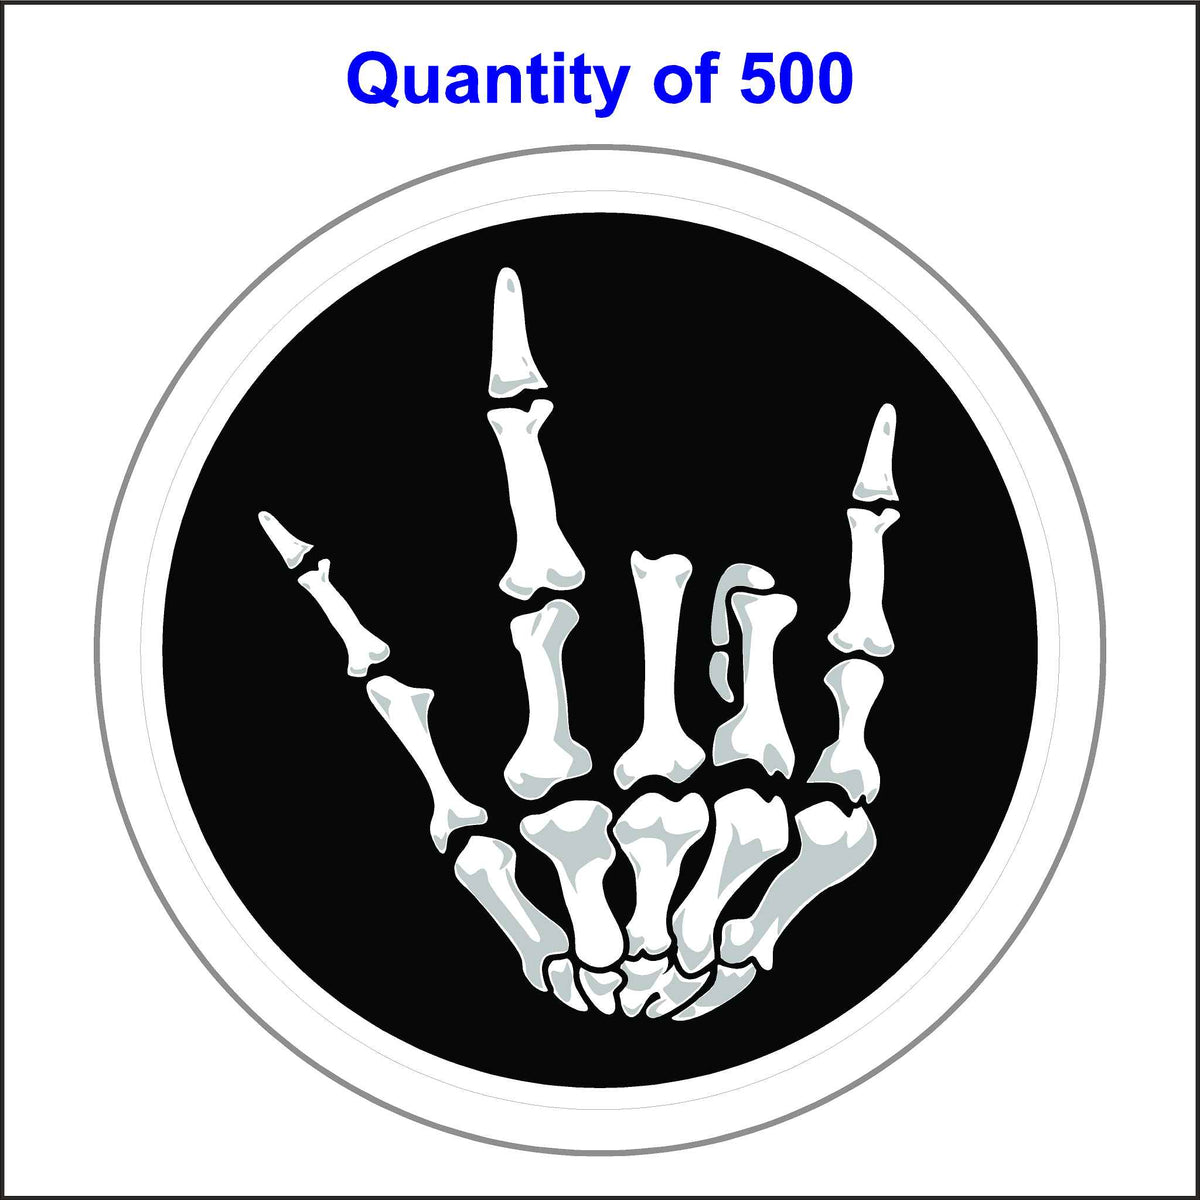 Skeleton Hand Rock on Stickers. 500 Quantity.